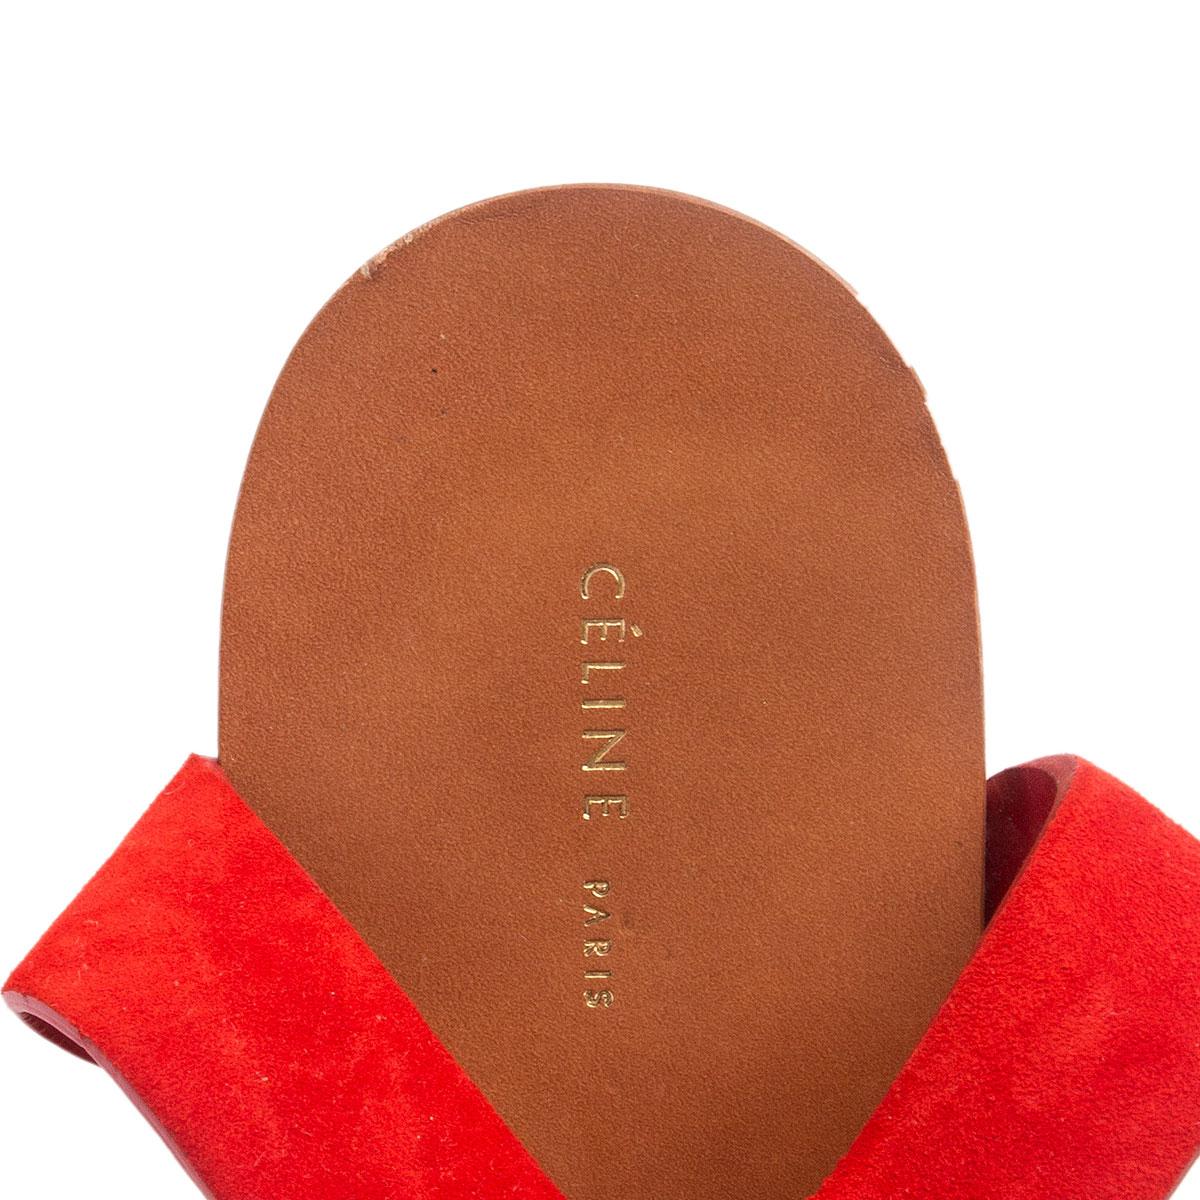 Red CELINE red leather STUDDED CLOG Sandals Shoes 39